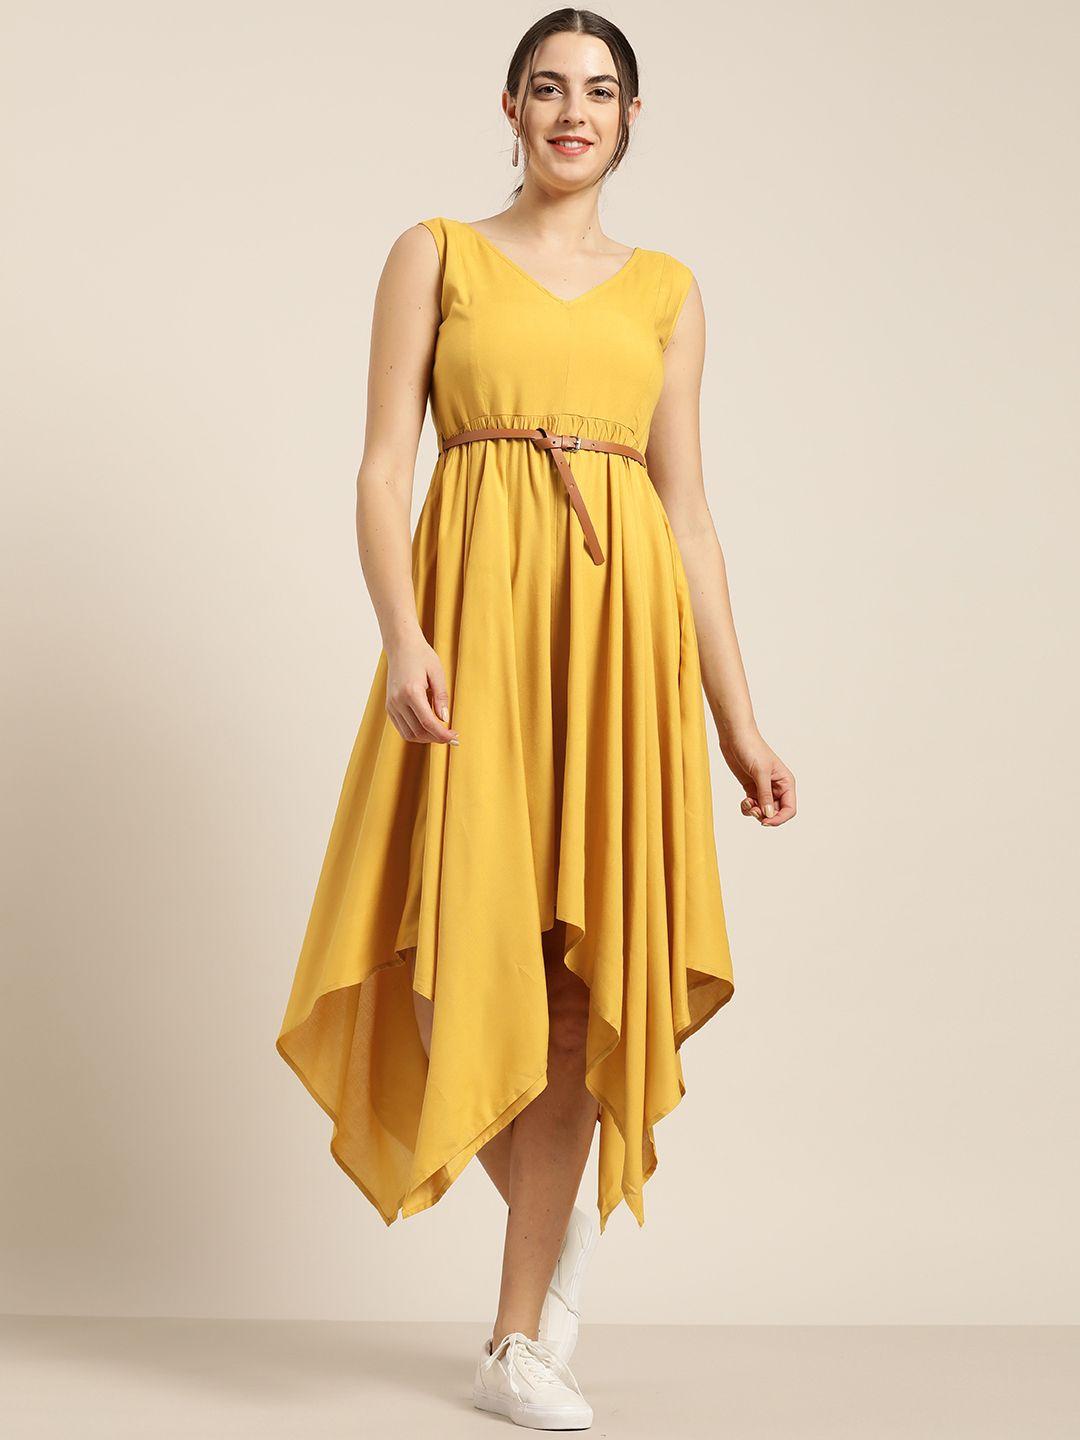 shae by sassafras women mustard yellow solid asymmetric a-line dress